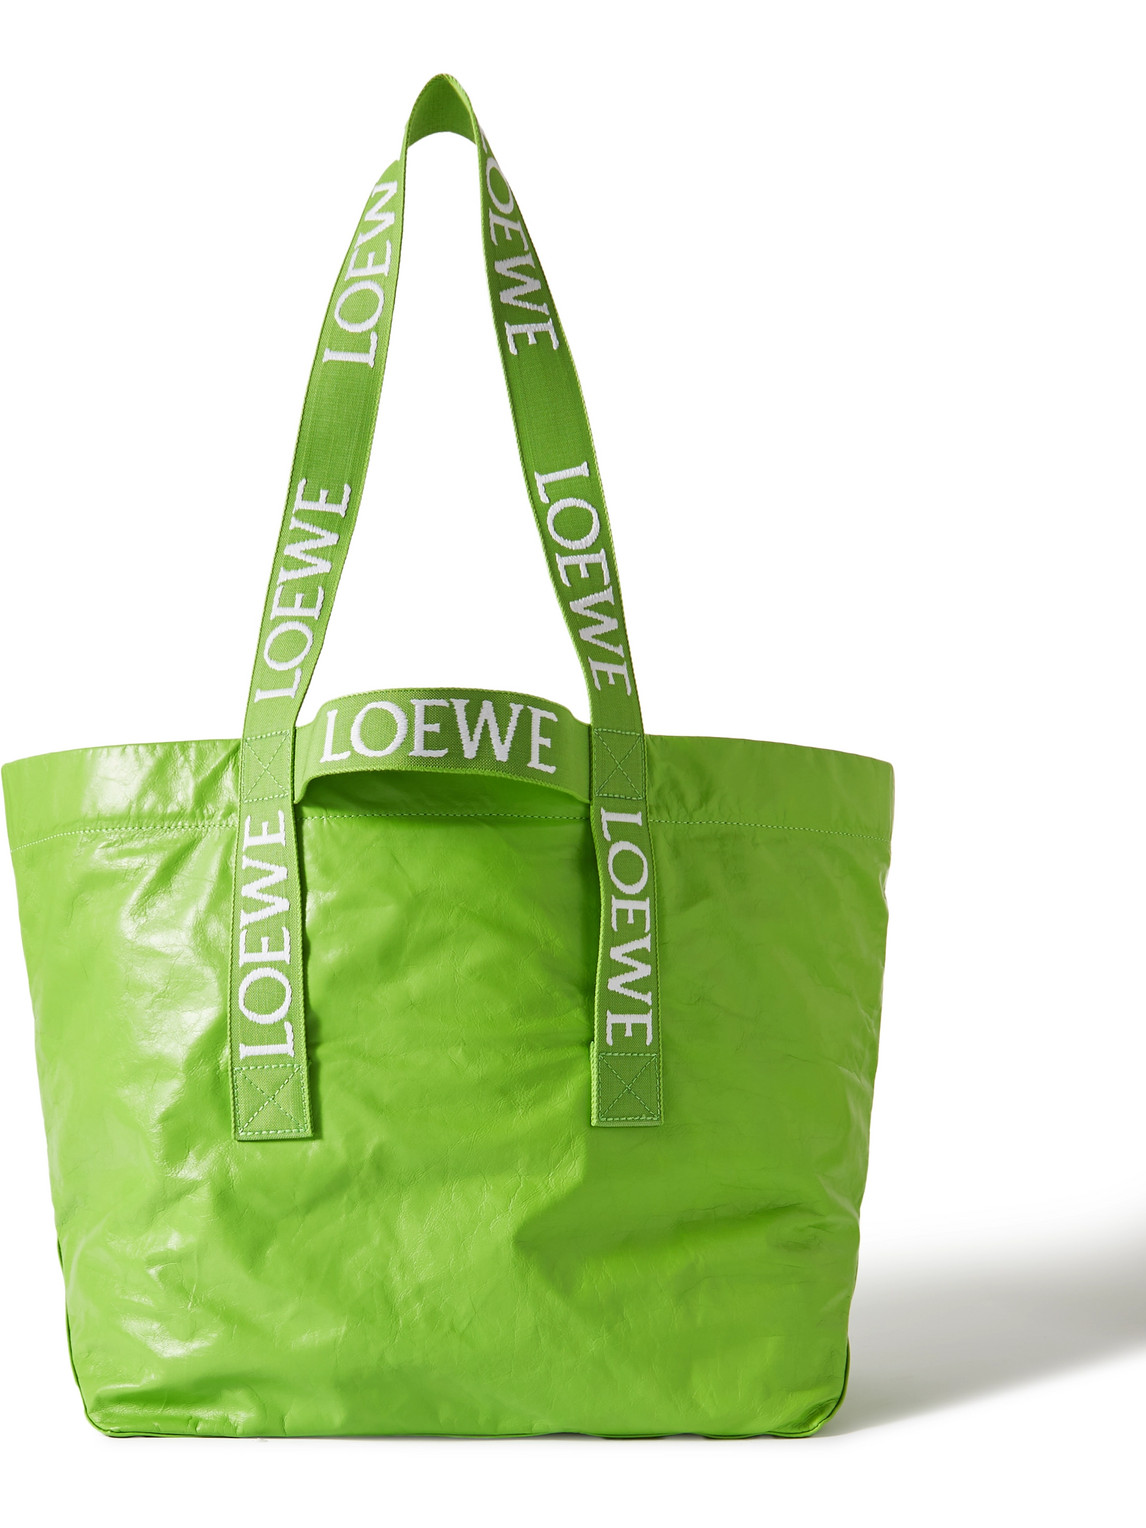 Loewe Distressed Leather Tote Bag In Green